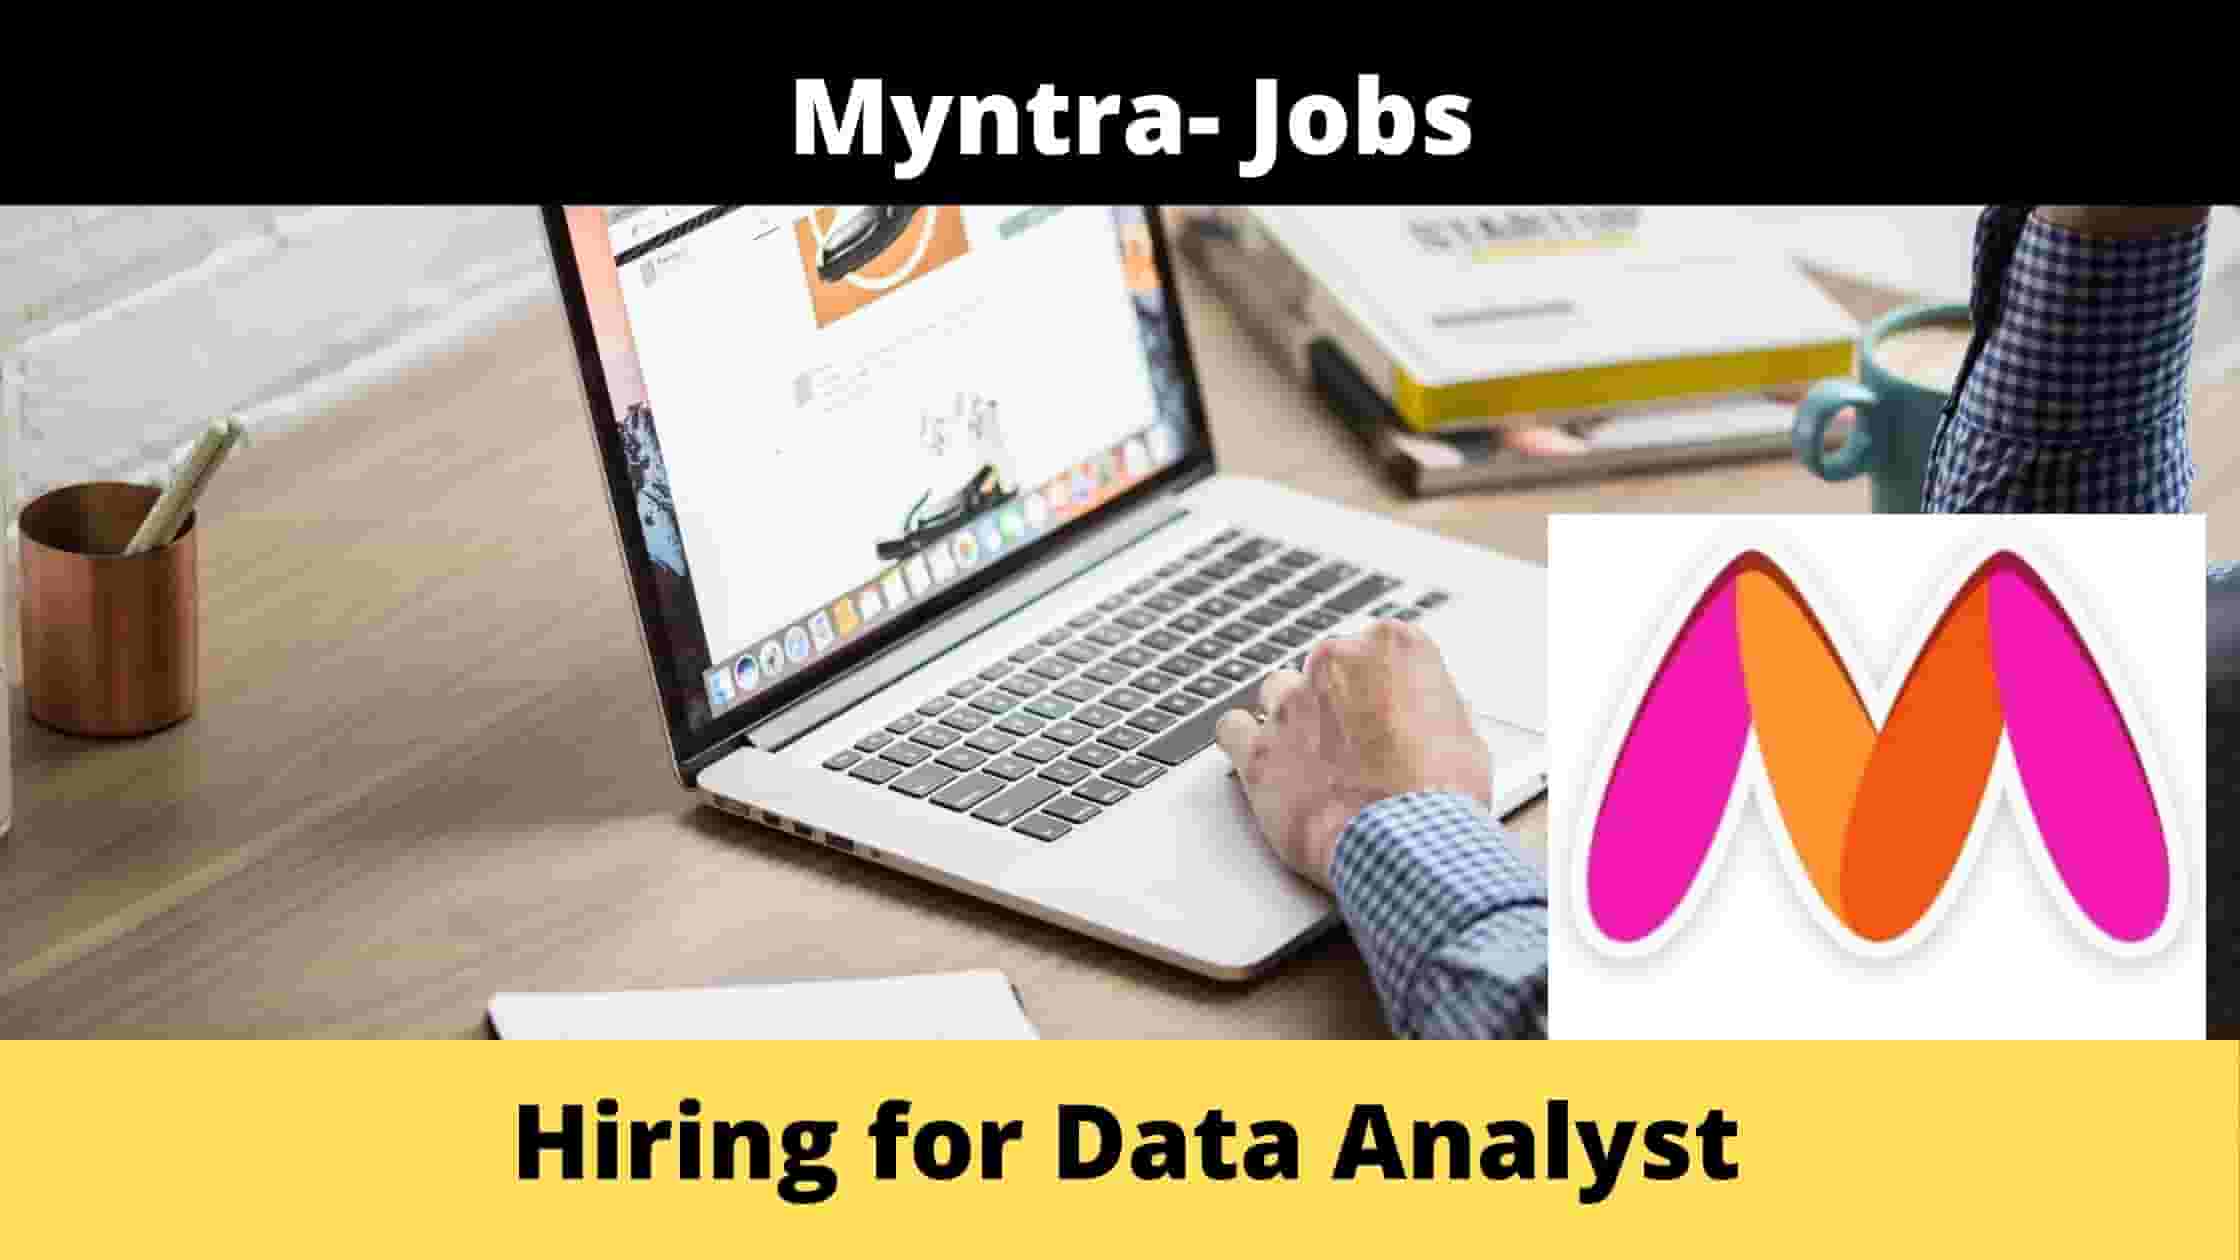 Myntra is hiring Data Analyst, [Apply Now]